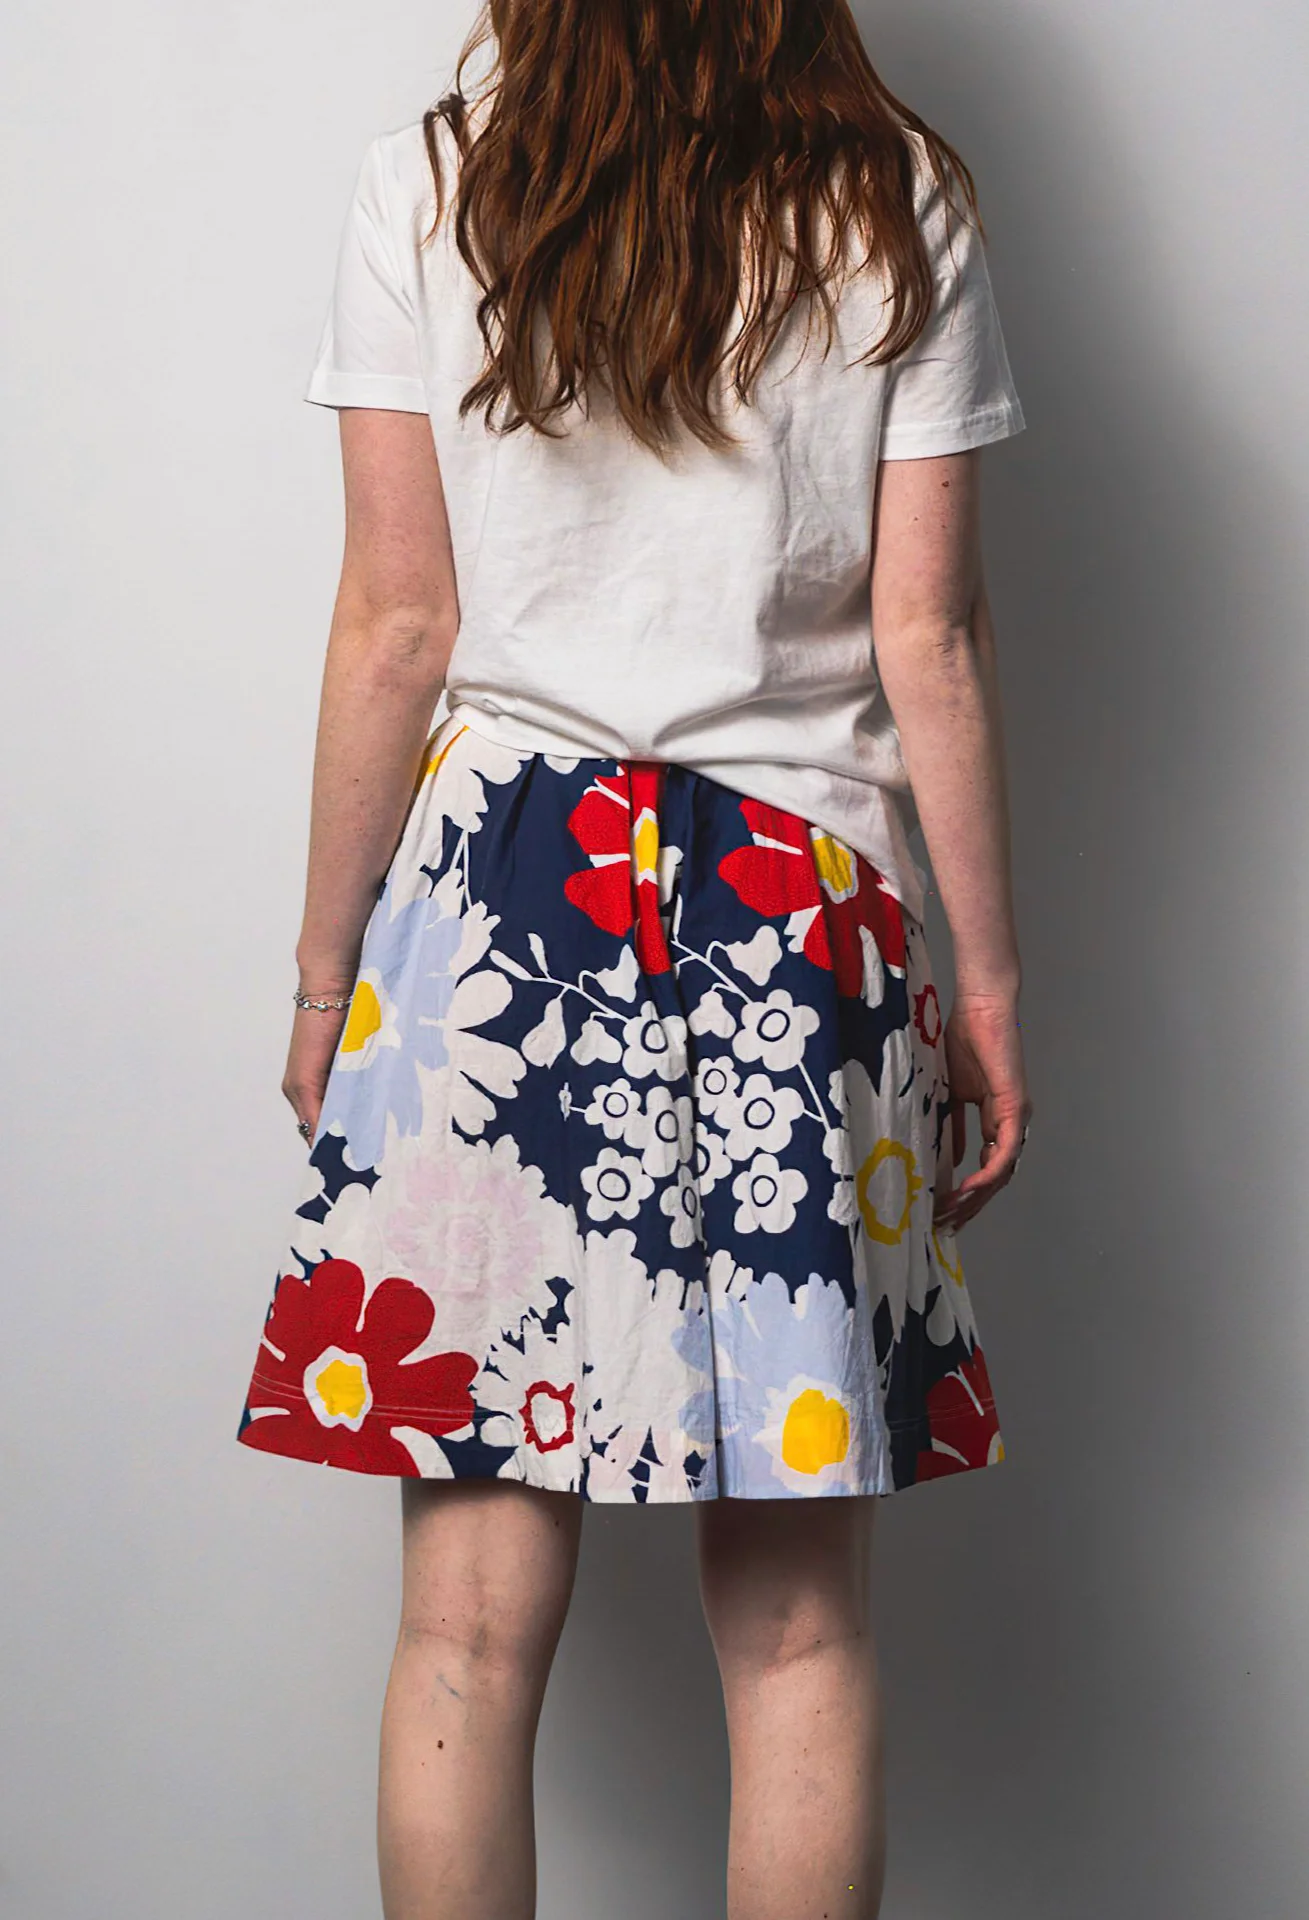 Boomerang - White Skirt with pattern (34)